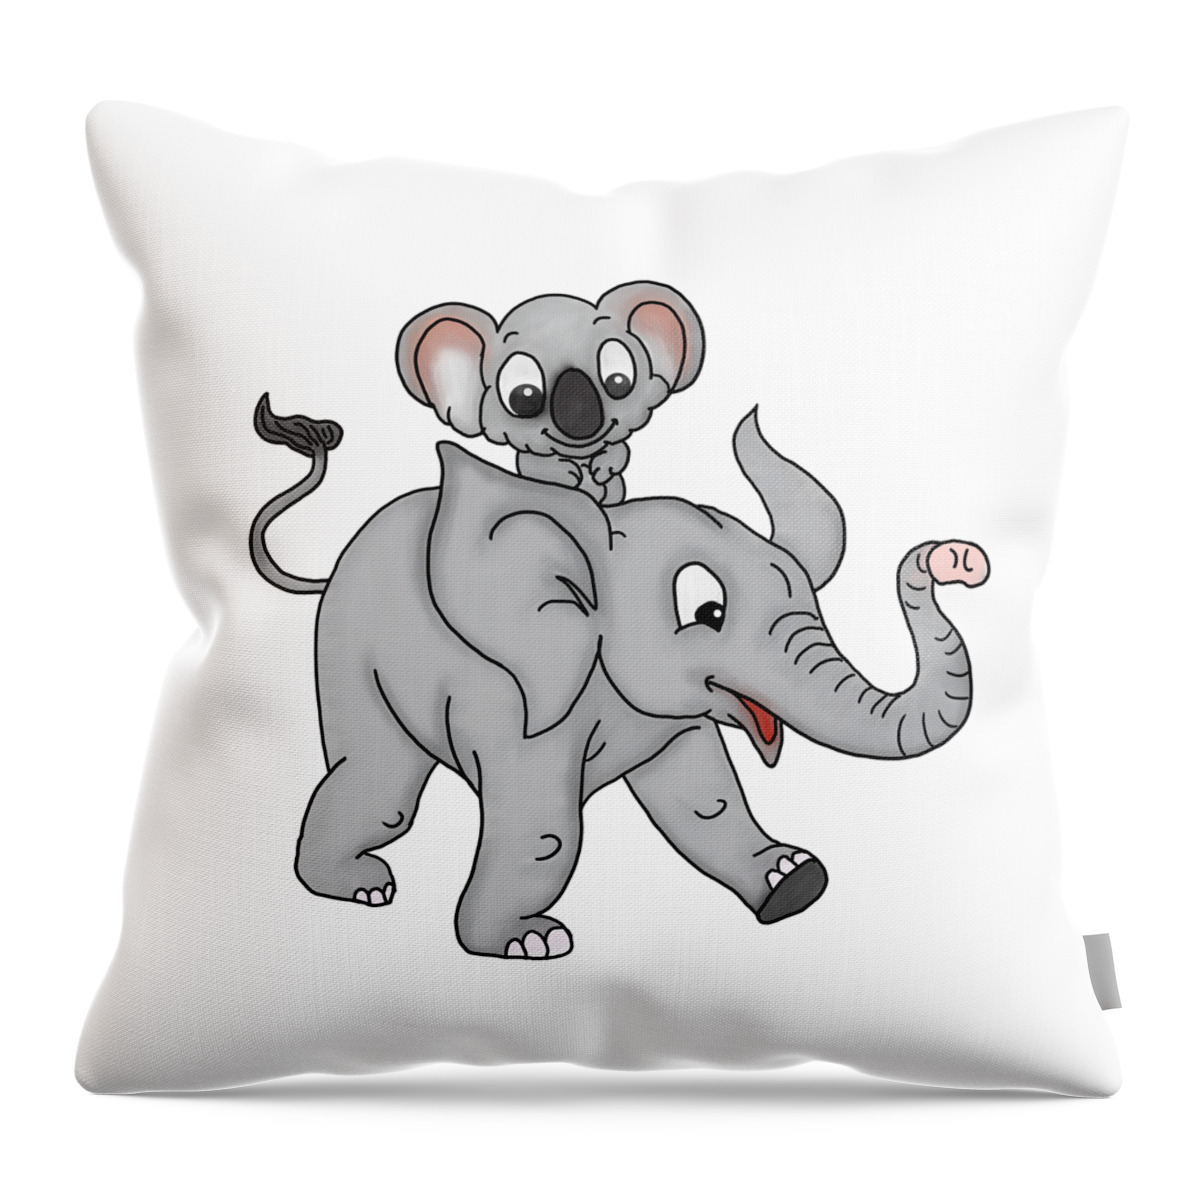 Bear Throw Pillow featuring the digital art Teddy Rides an Elephant by John Haldane